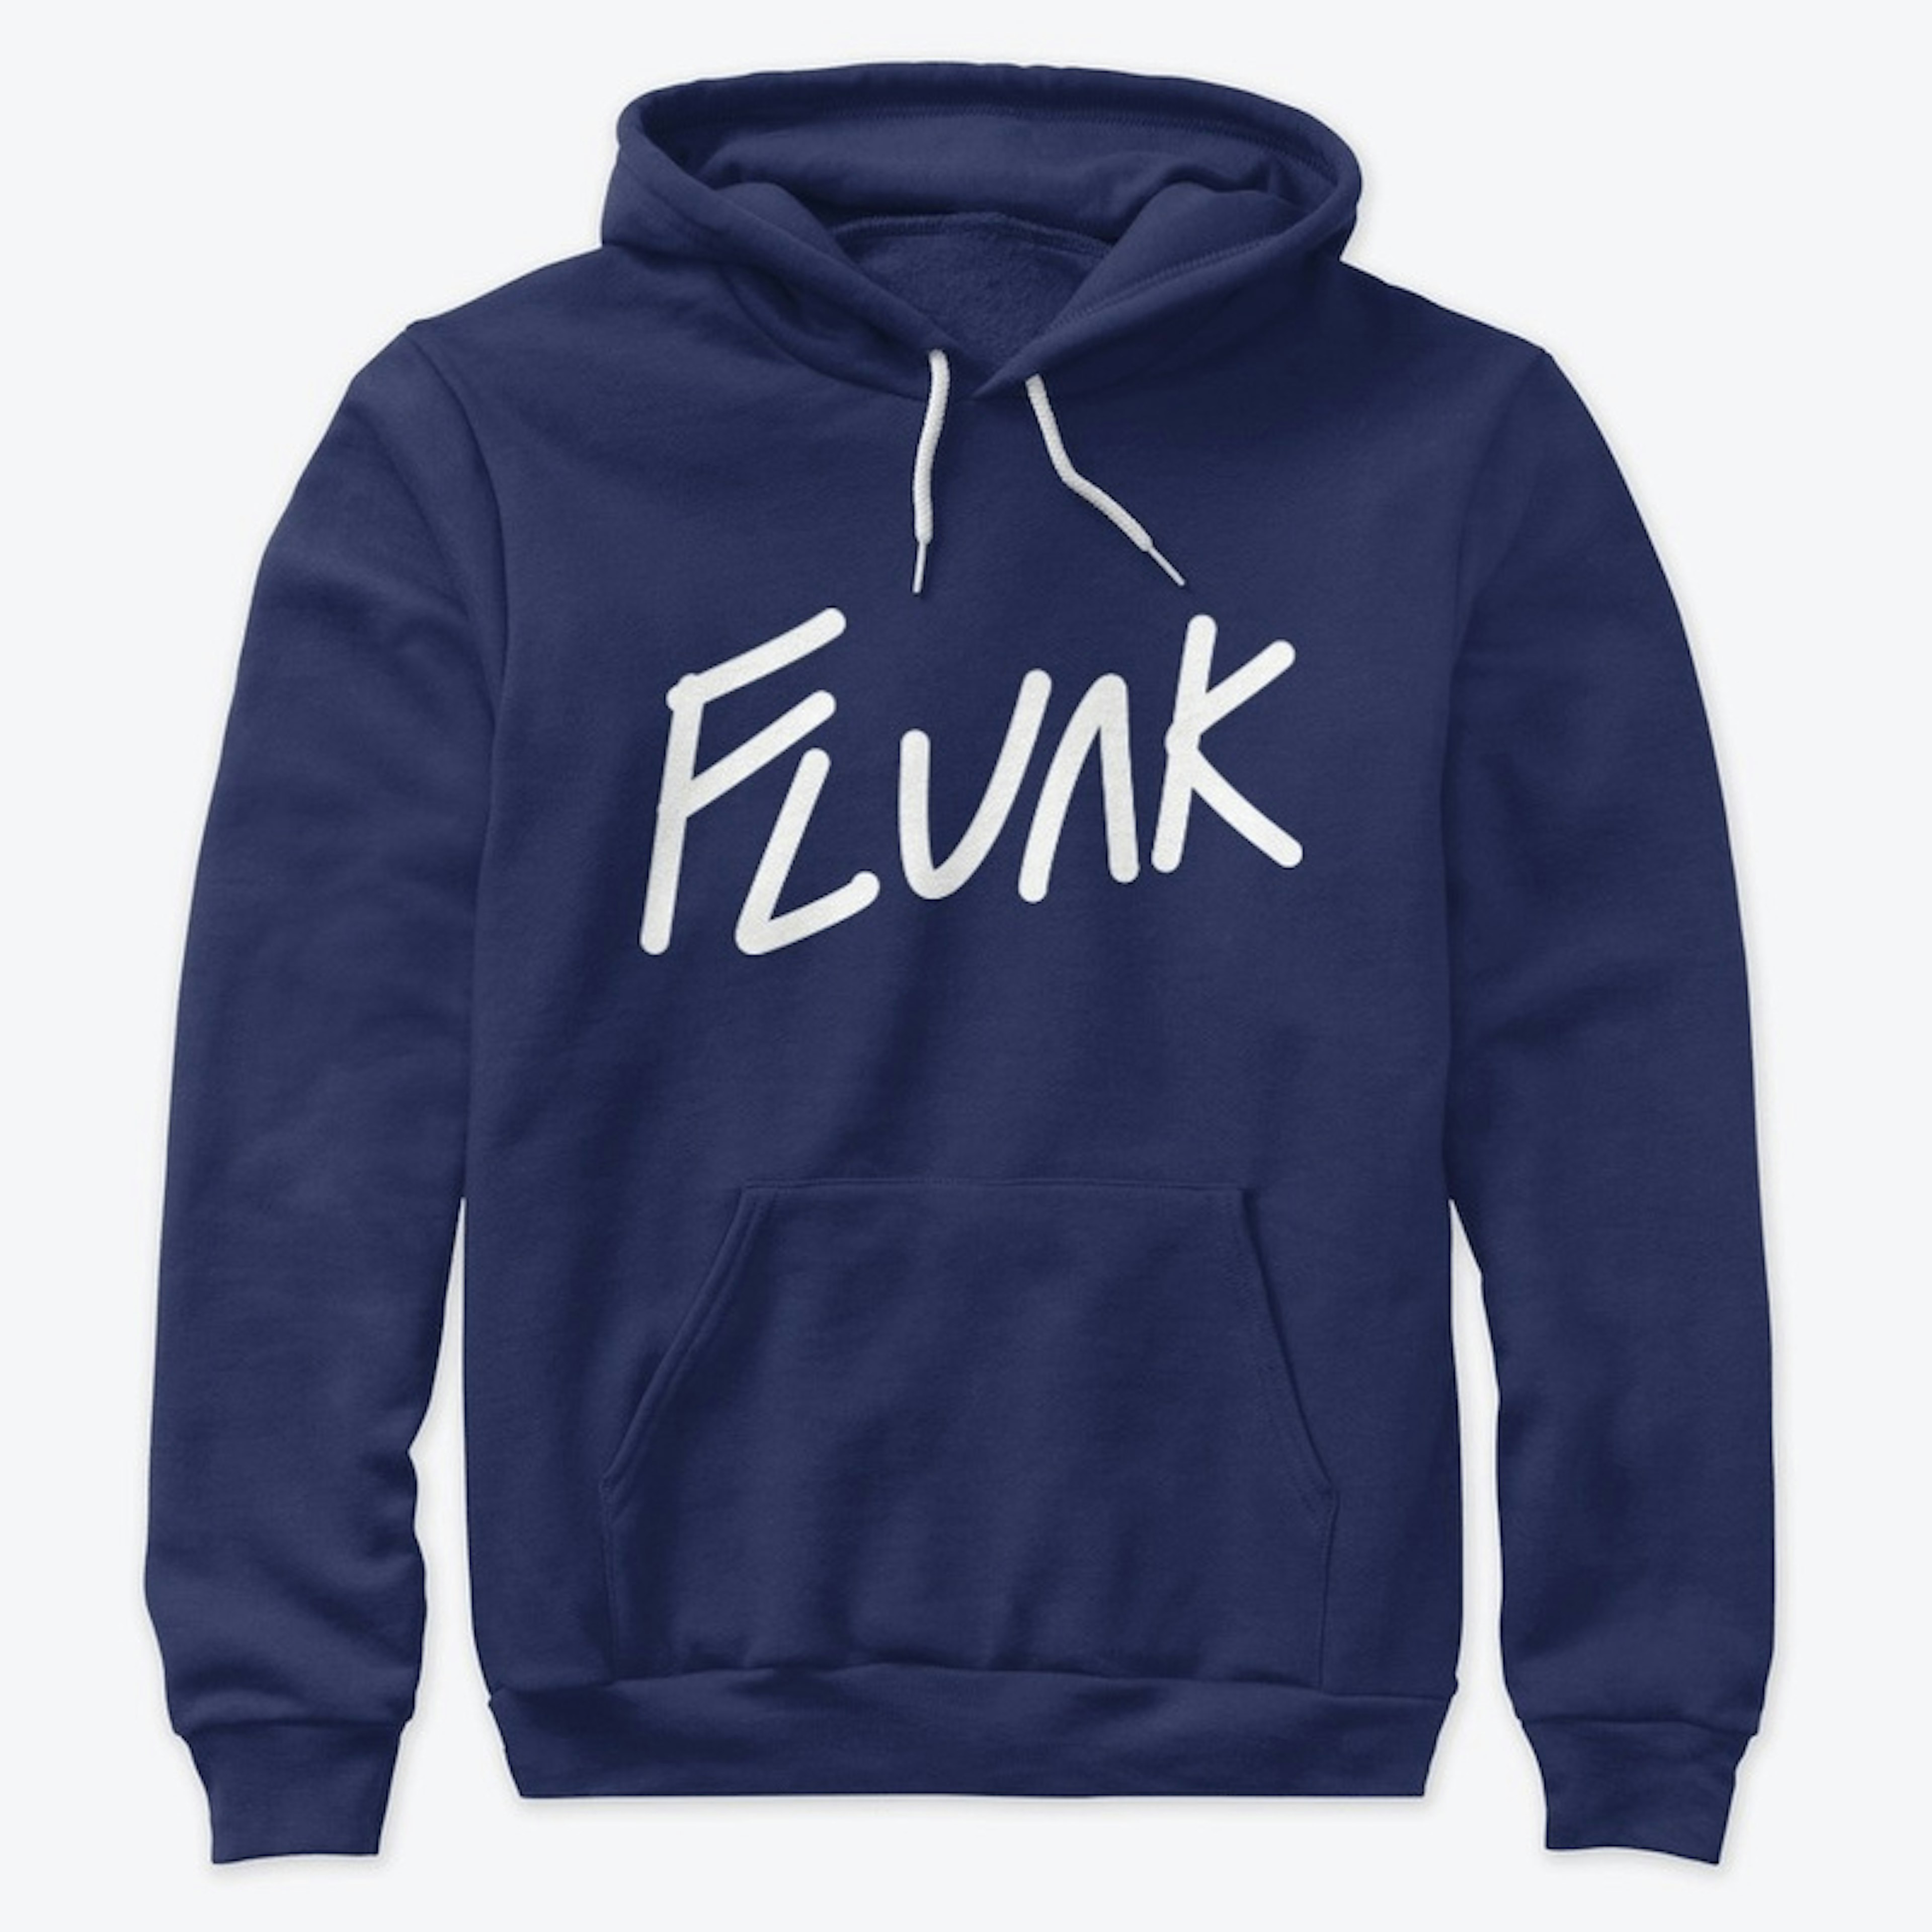 Flunk hoodie (white logo)